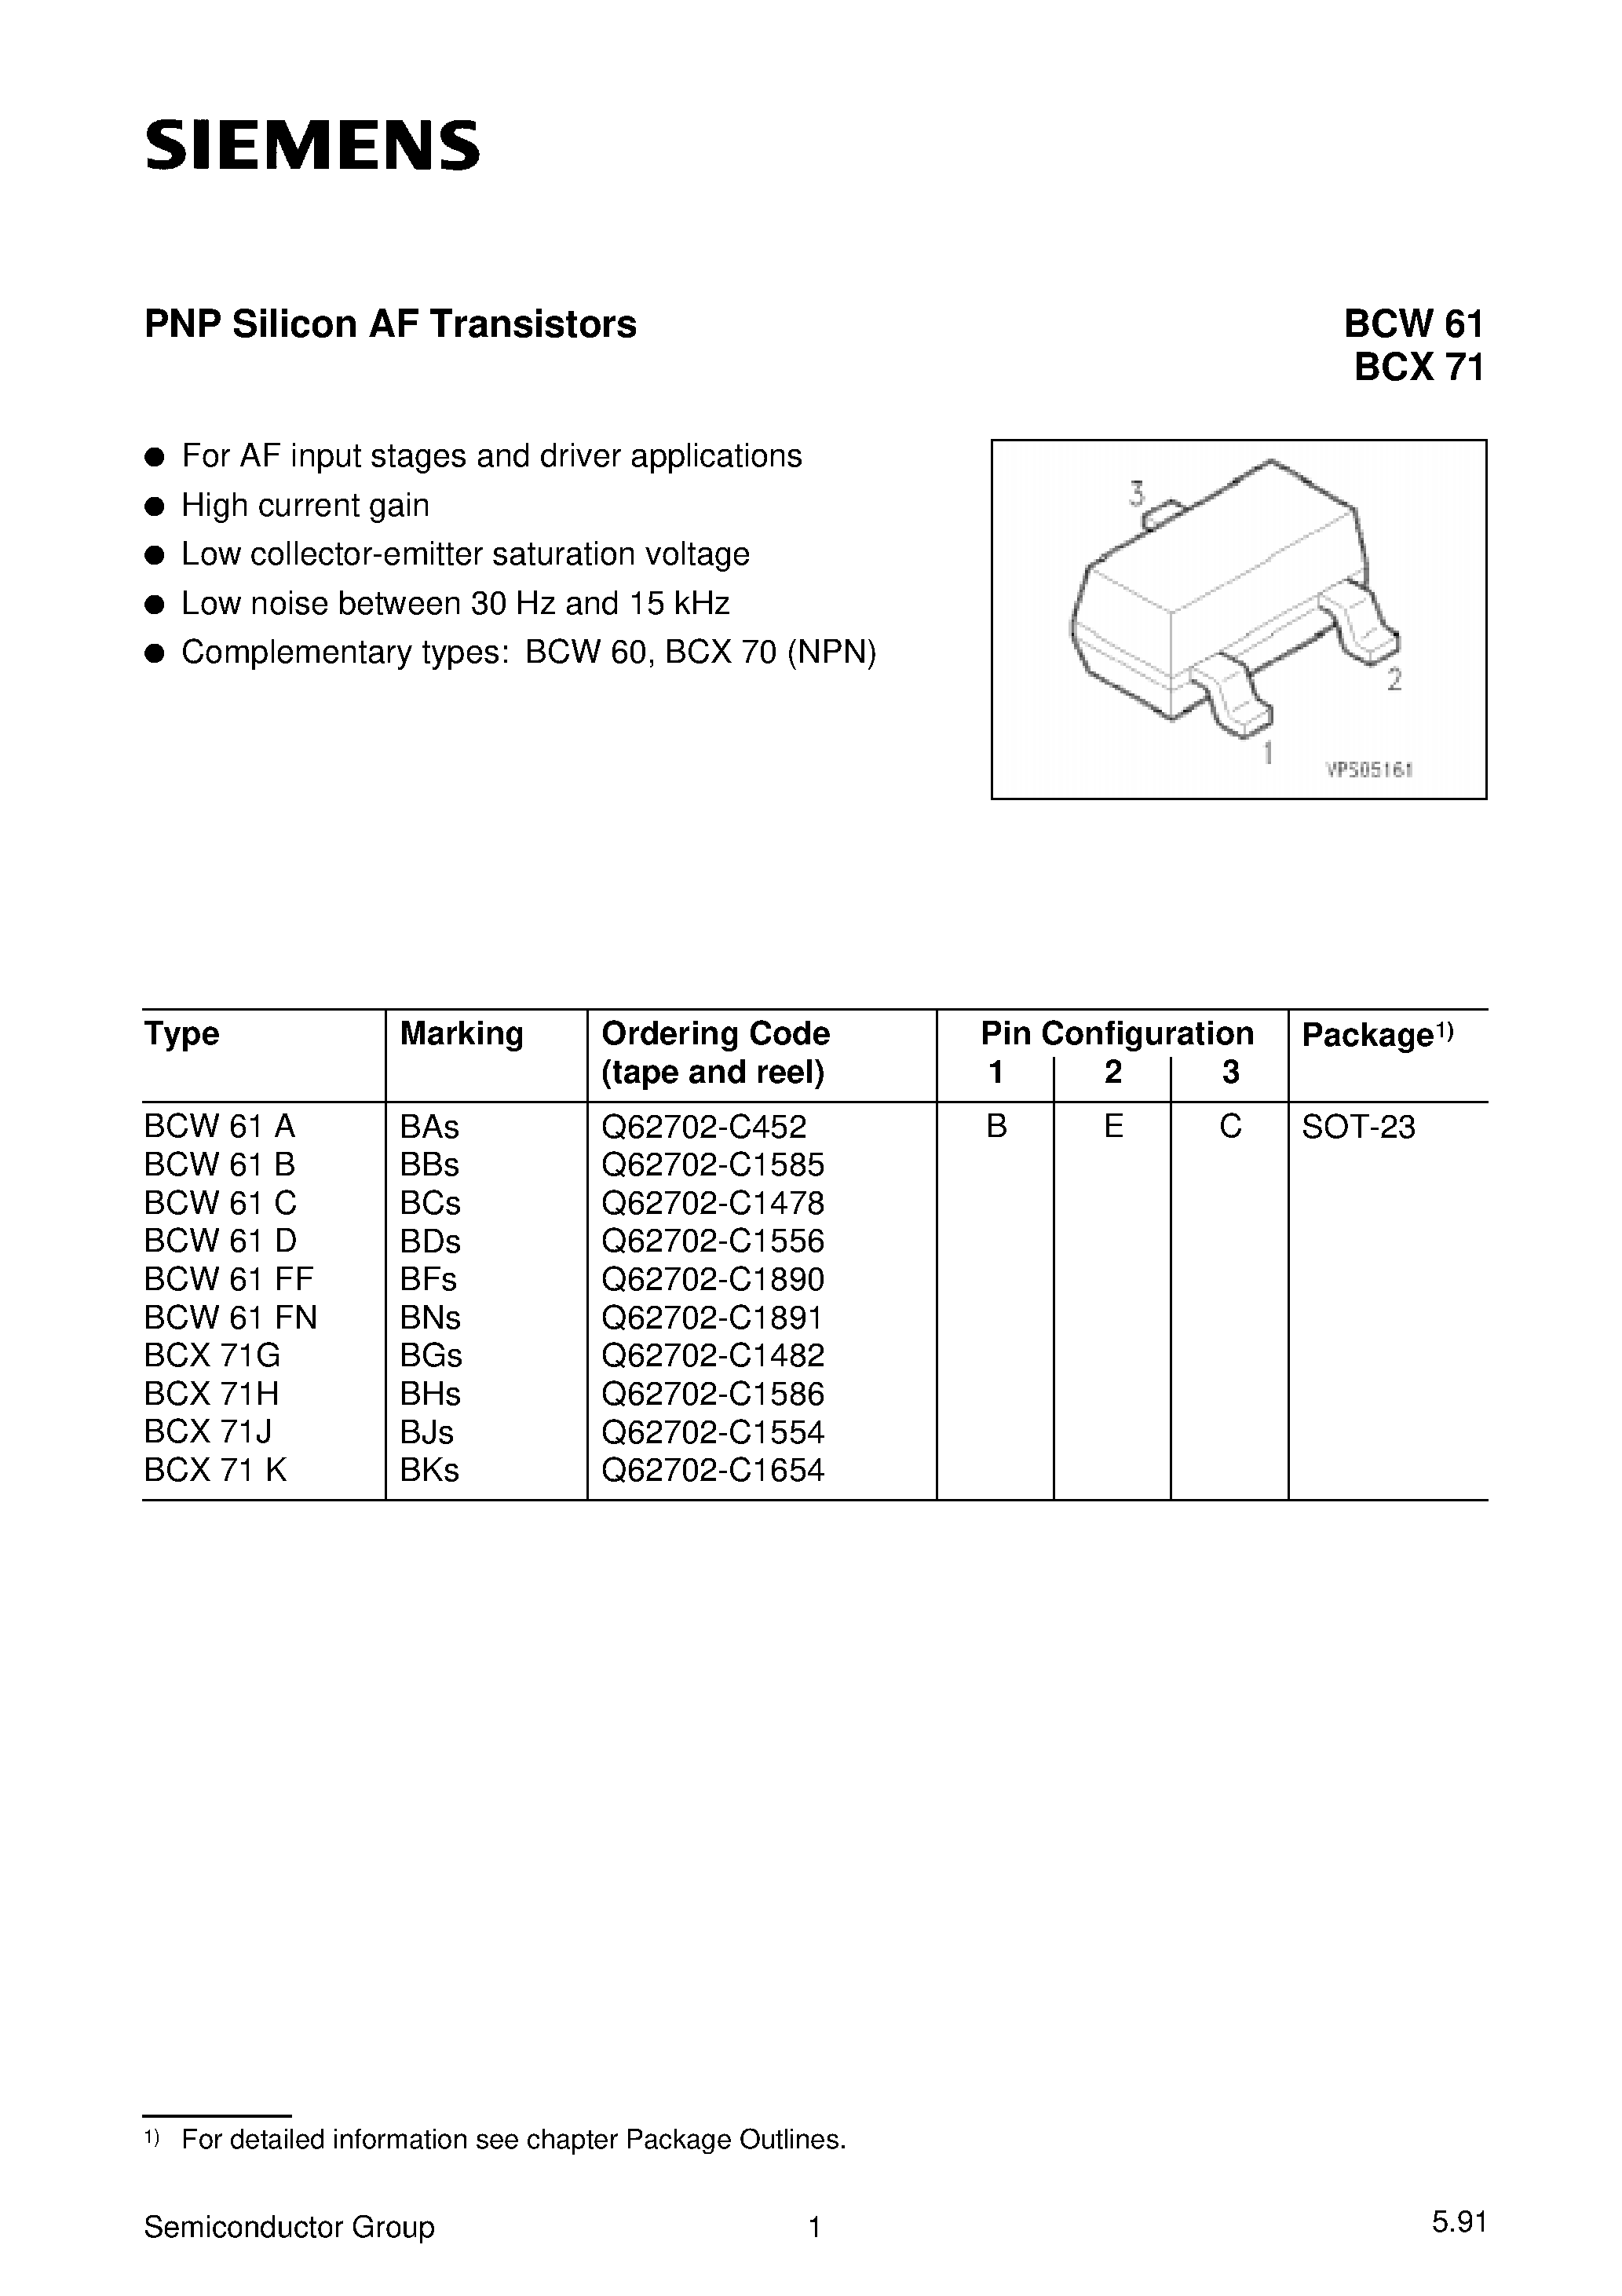 Datasheet BCX71K - PNP Silicon AF Transistors (For AF input stages and driver applications High current gain) page 1